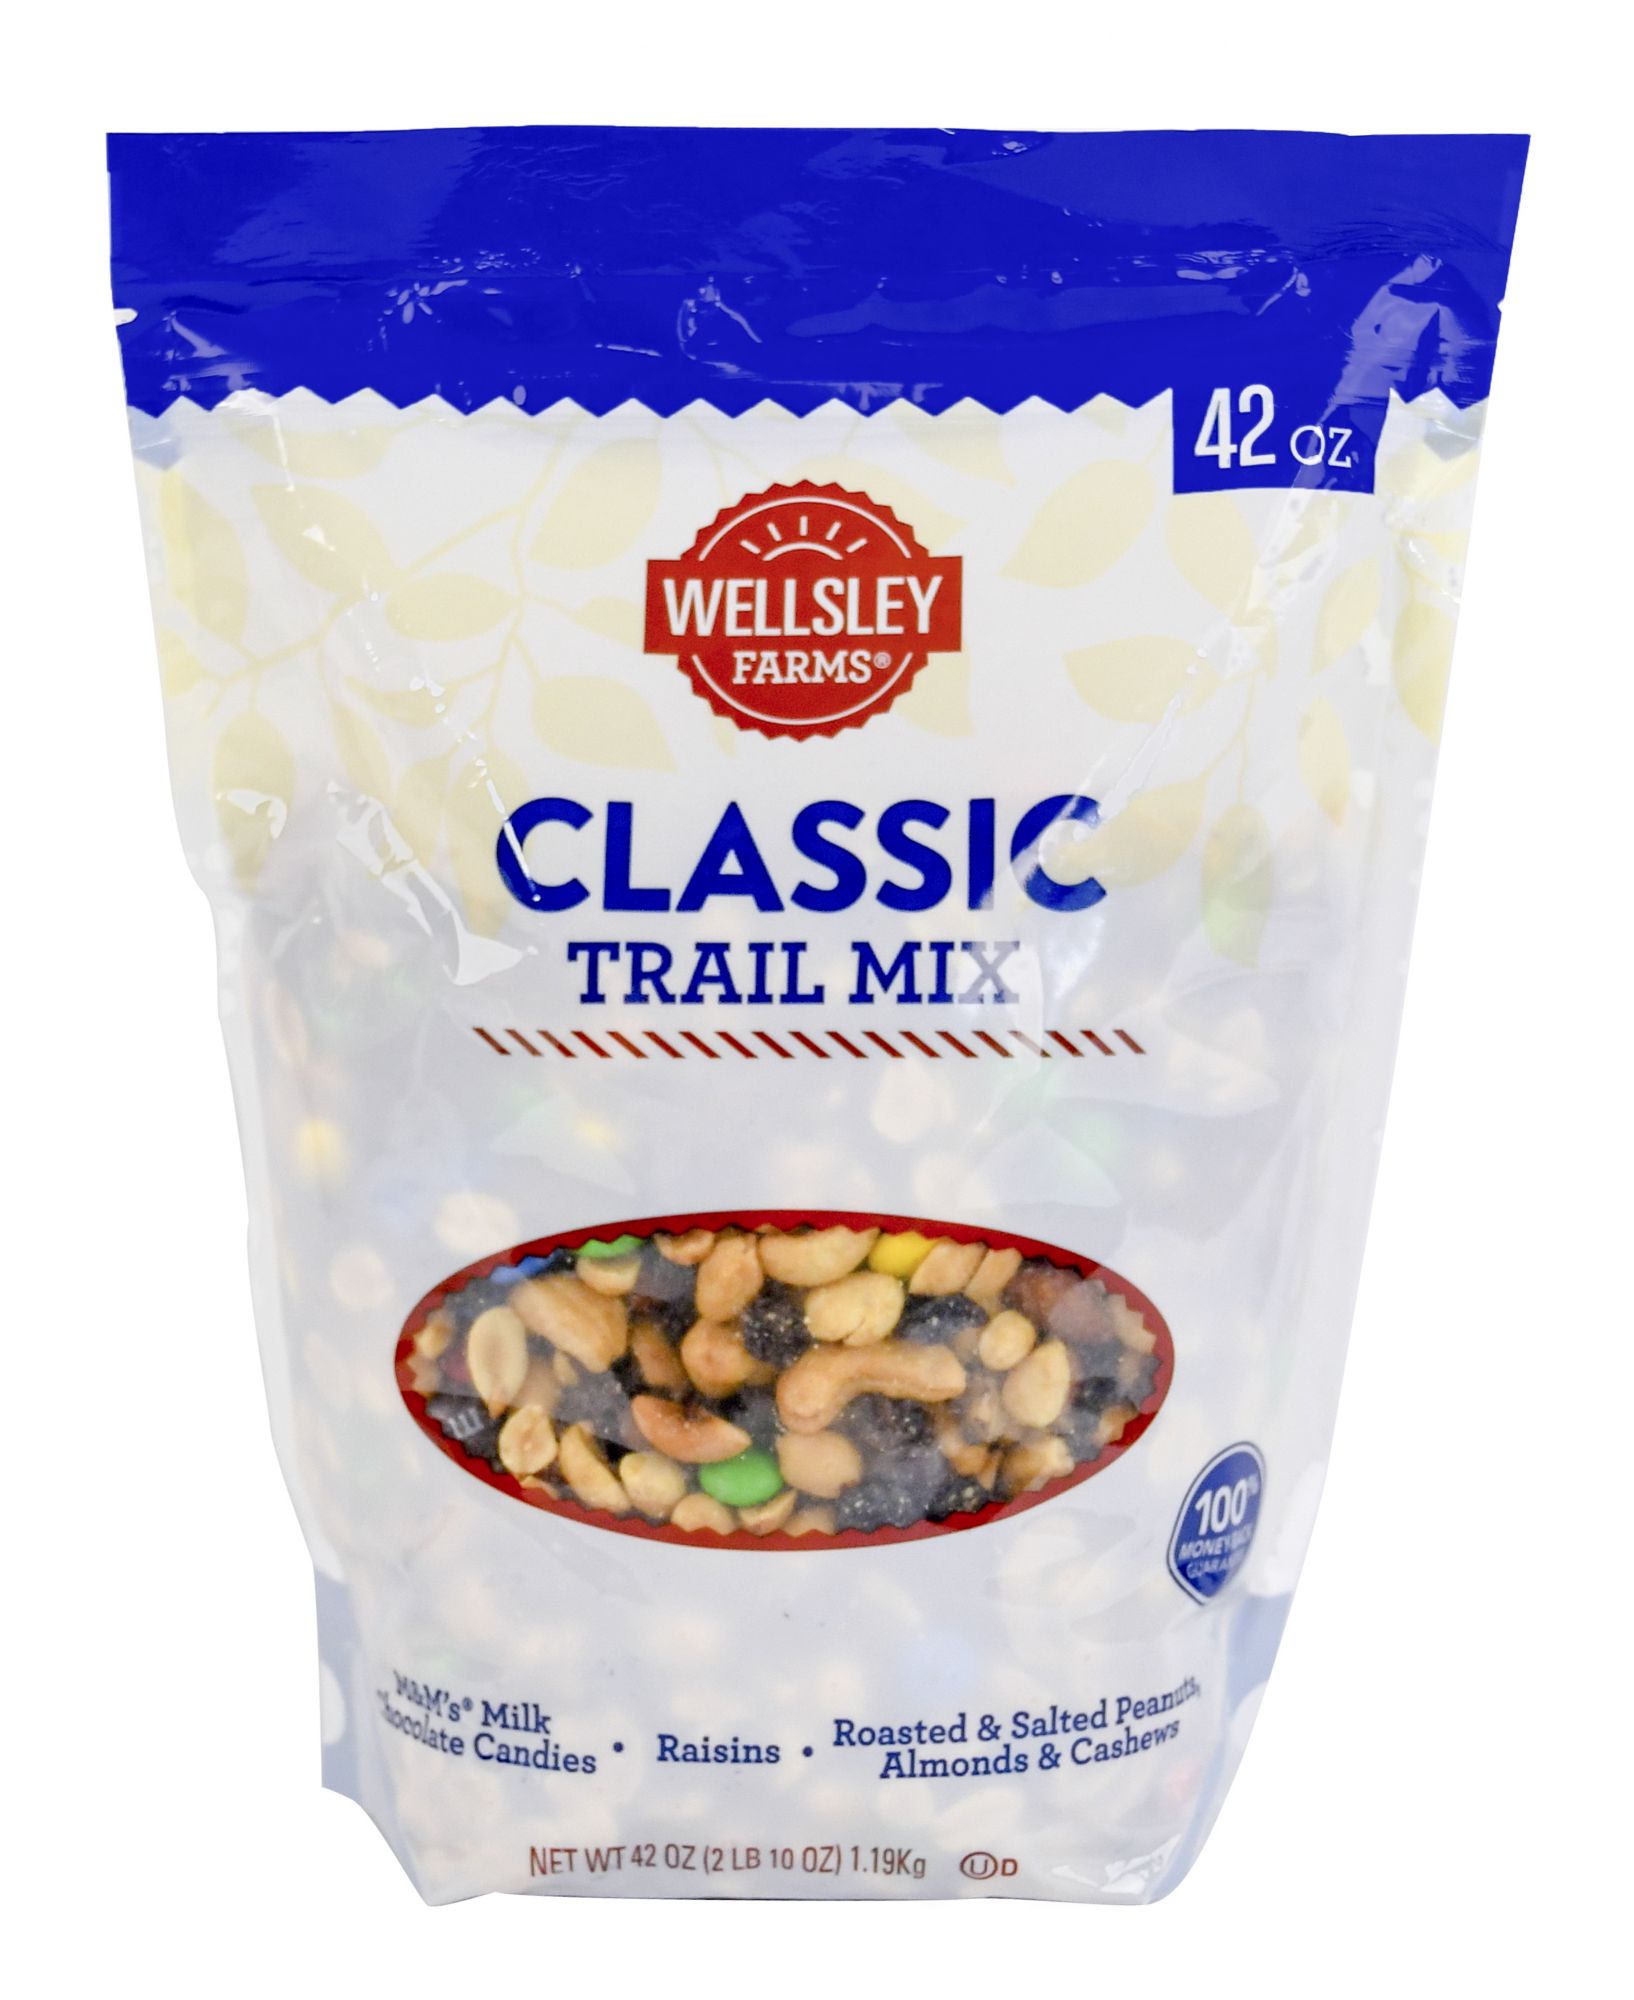 Kirkland Trail Mix Almonds Cashews Peanuts Raisins M&M's Chocolate USA, 4  pounds